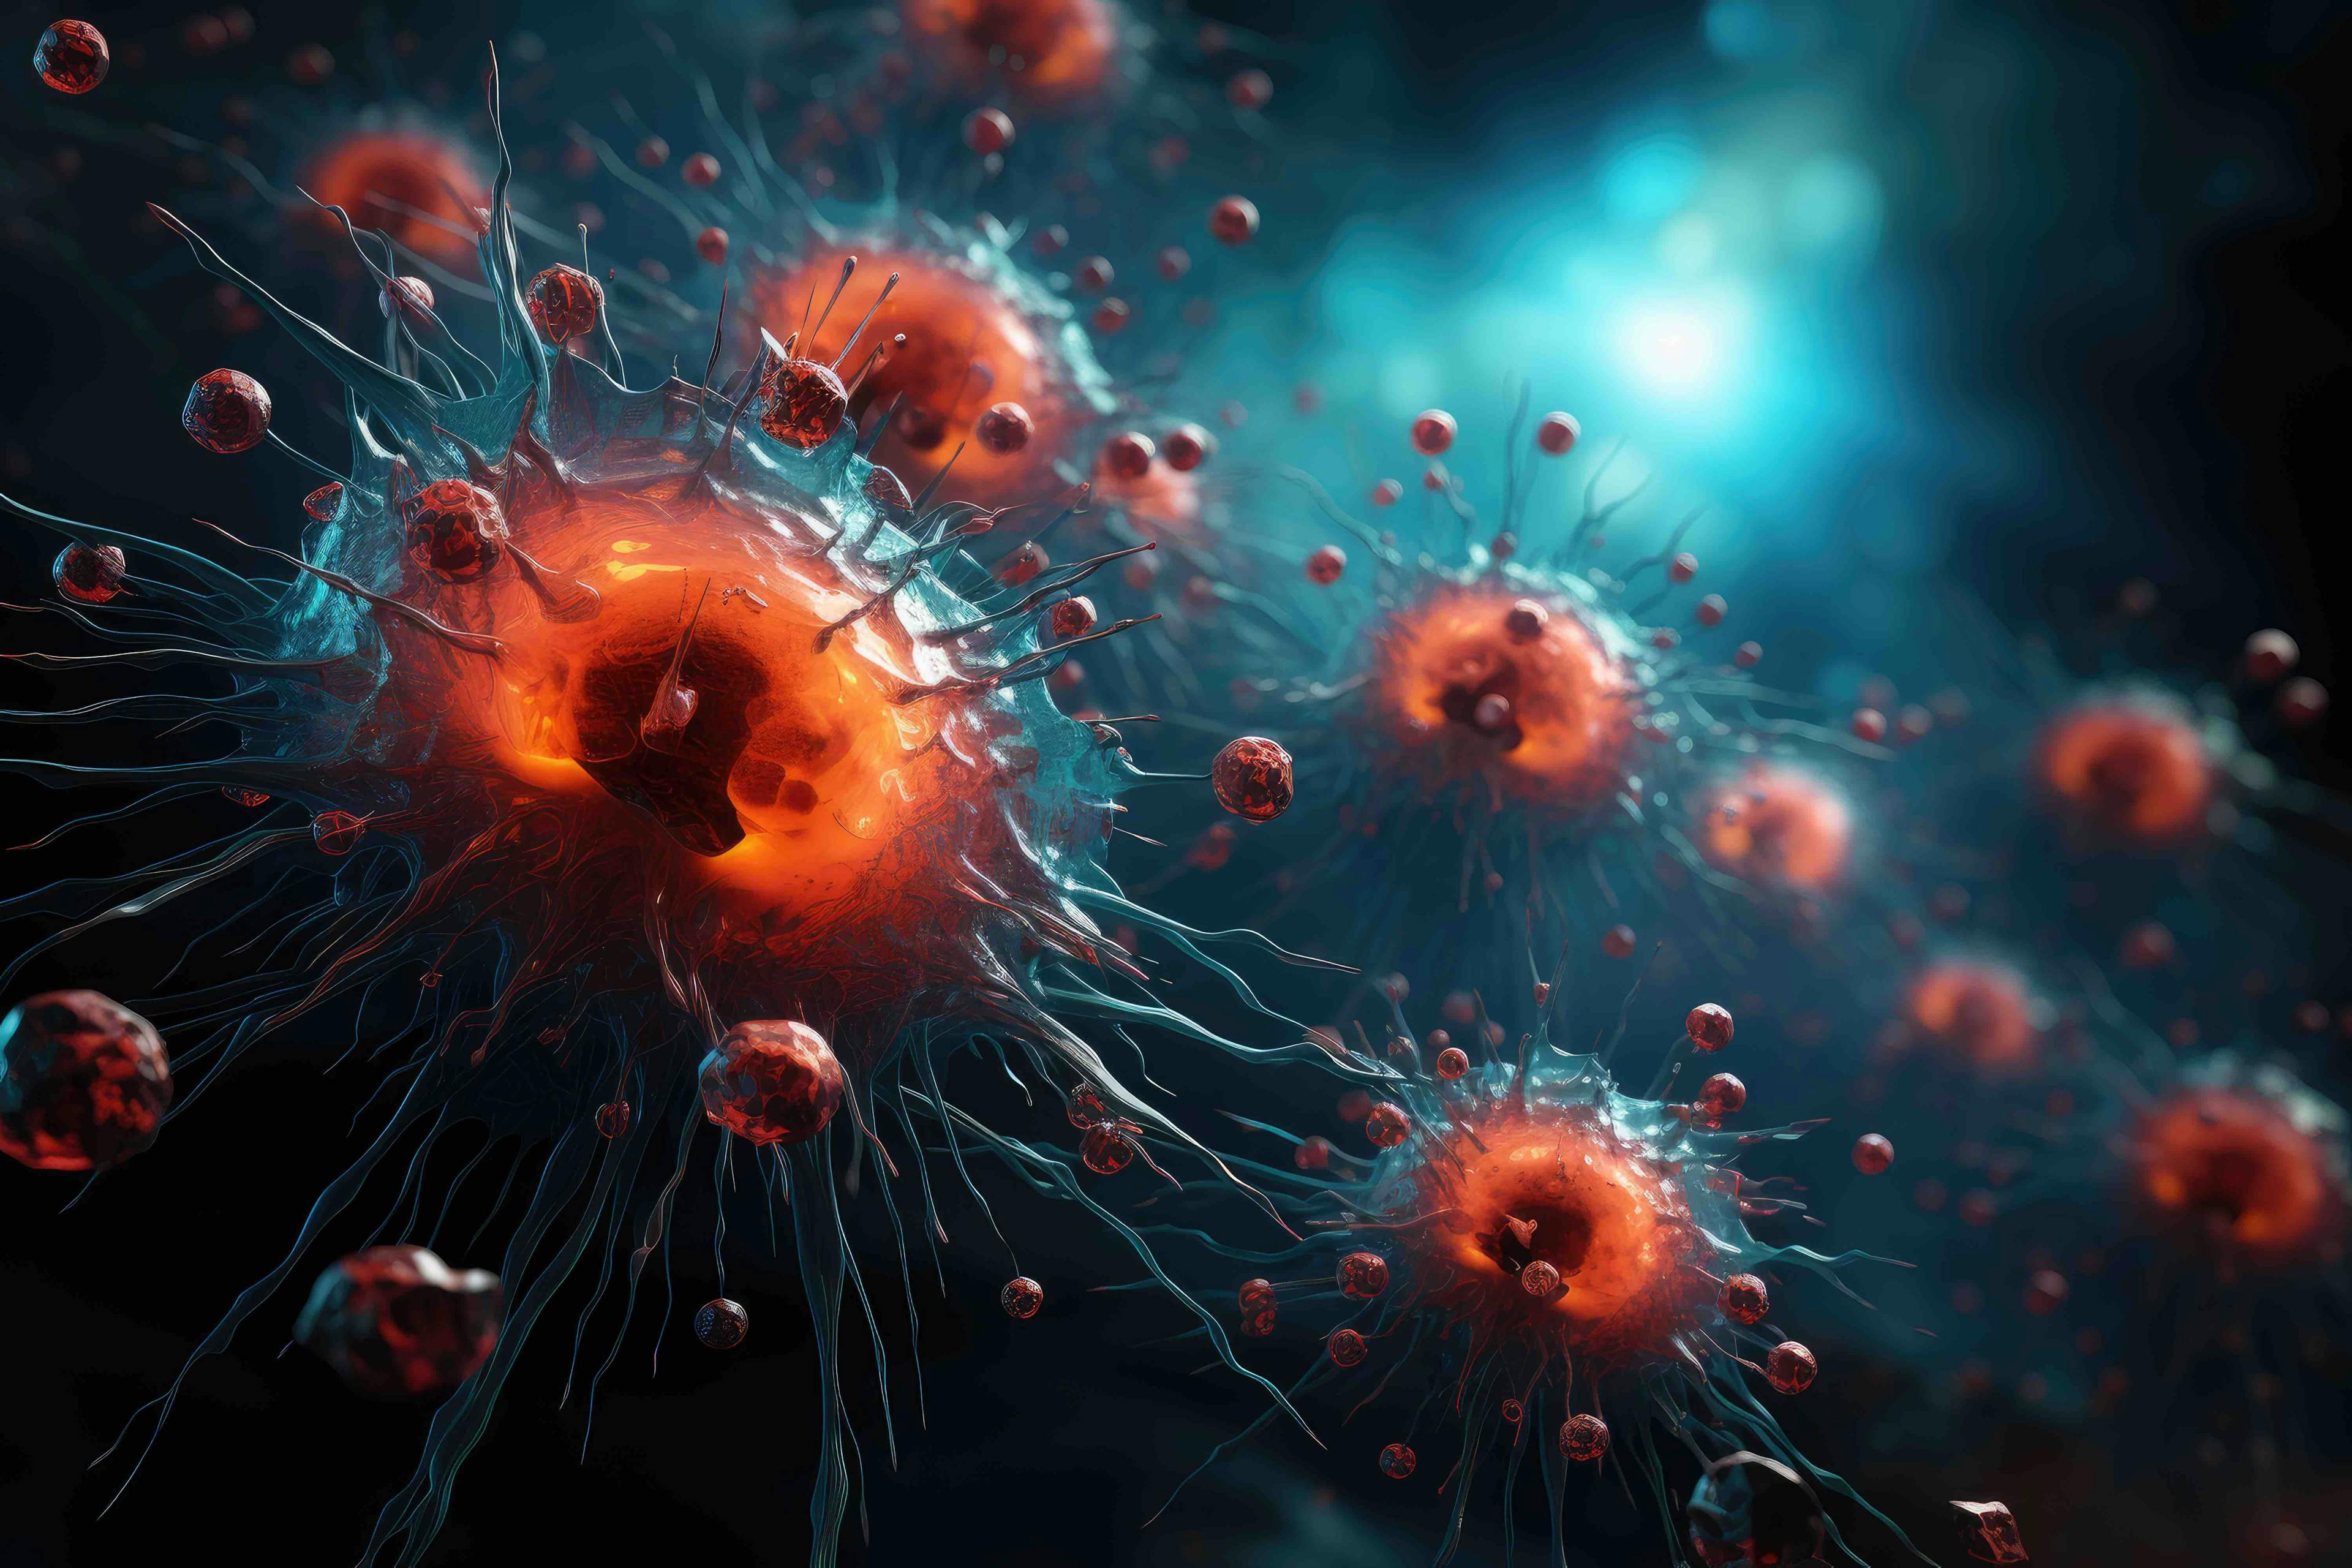 Illustration of T cells | Image credit: Sebastian - stock.adobe.com